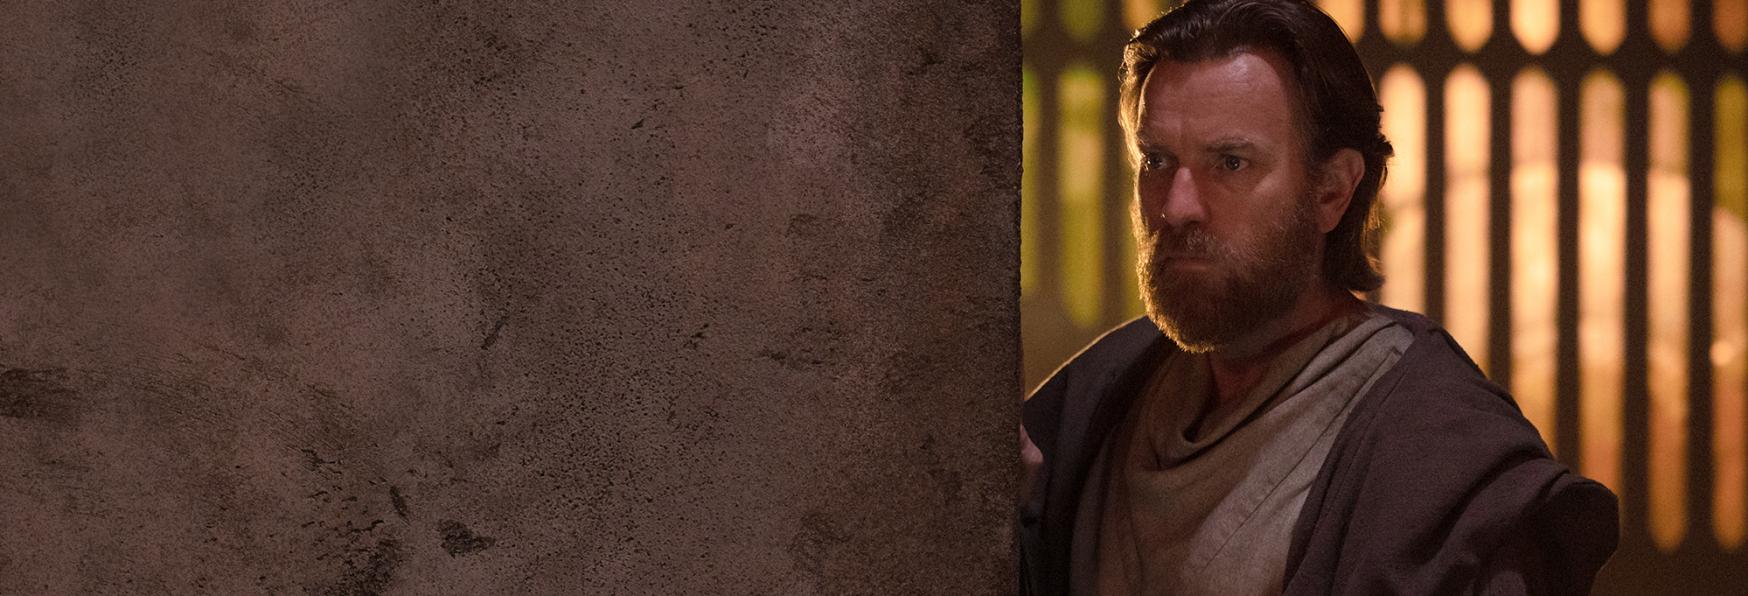 Obi-Wan Kenobi 1x06: Importante Cameo nel Finale della Miniserie targata Disney+